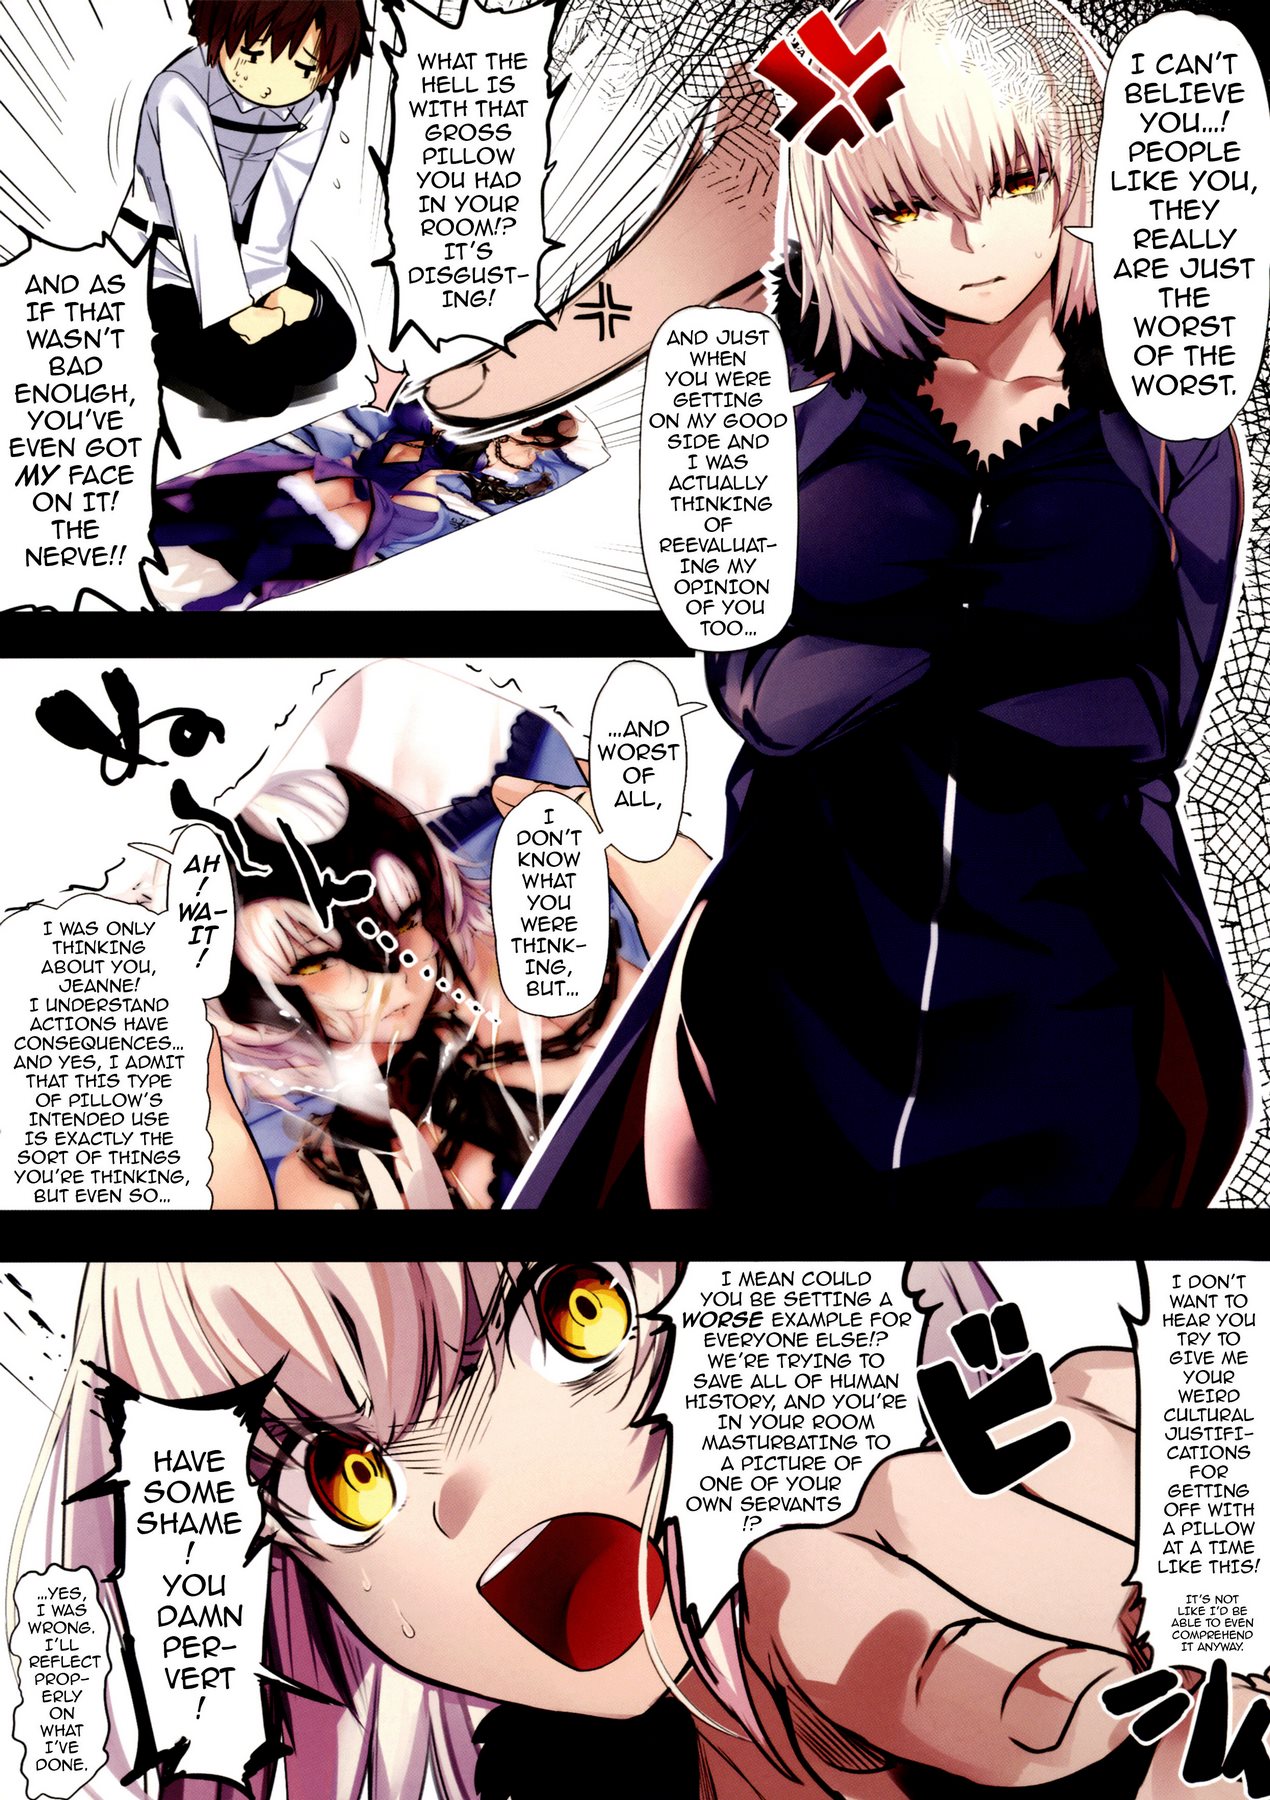 Jeanne alter porn comics